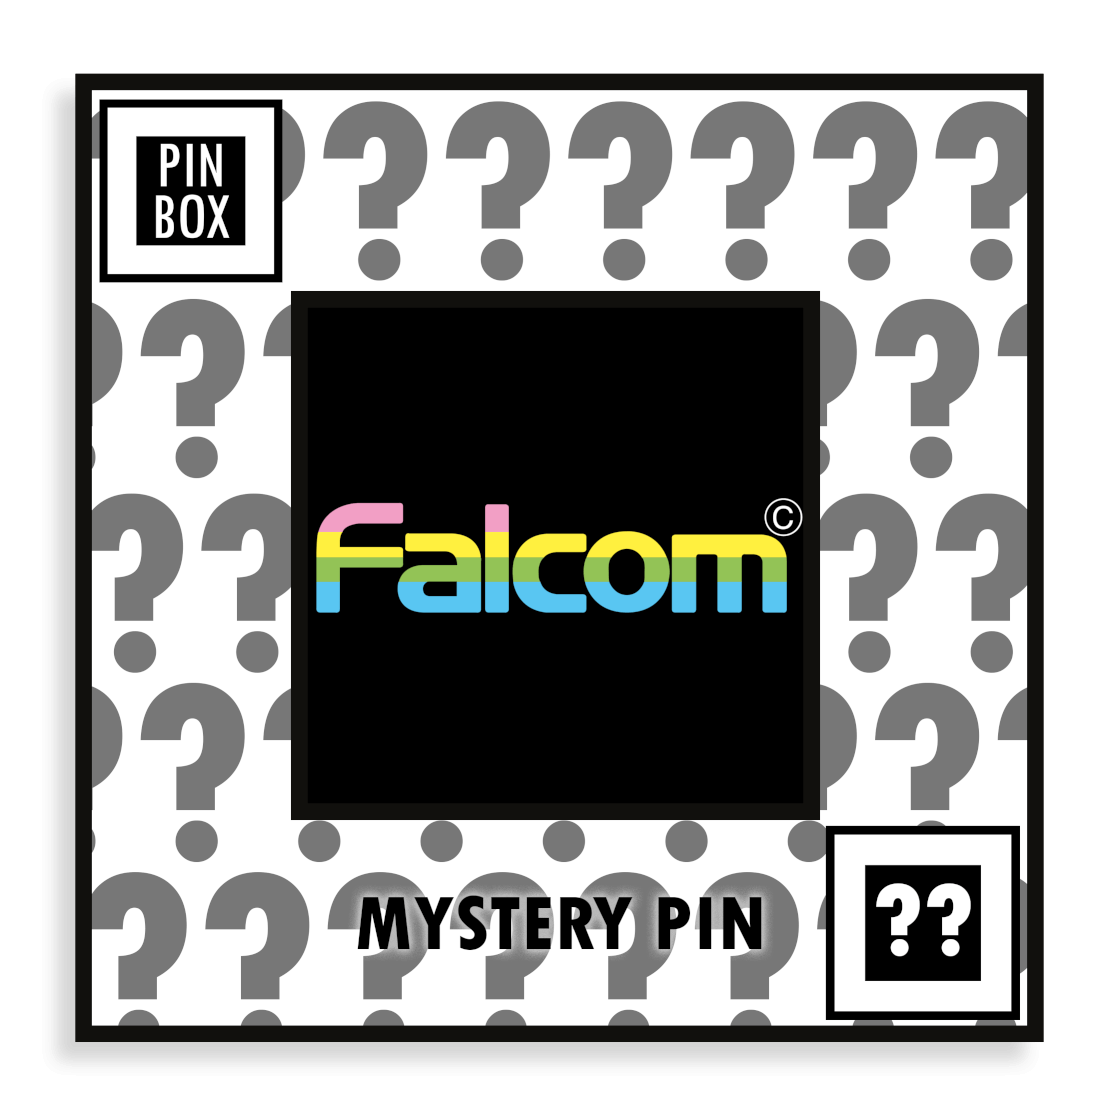 Falcom Mystery Pin - B Grade